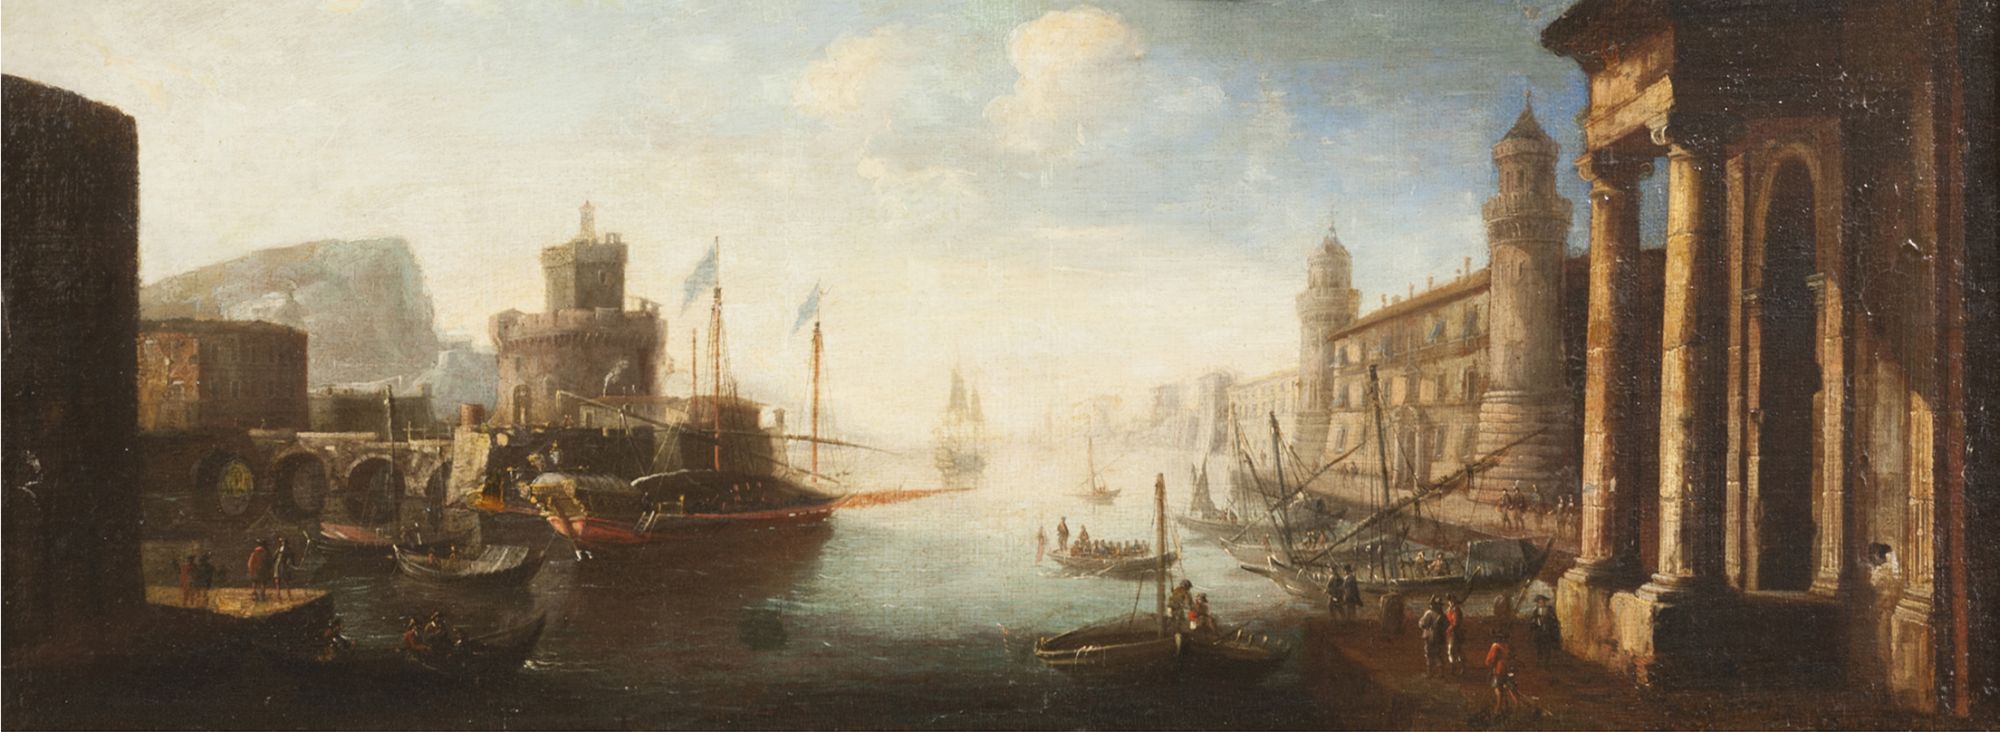 Follower of Gaspar van Wittel, called Vanvitelli, Dutch 1653-1736- Capriccio of a harbour with